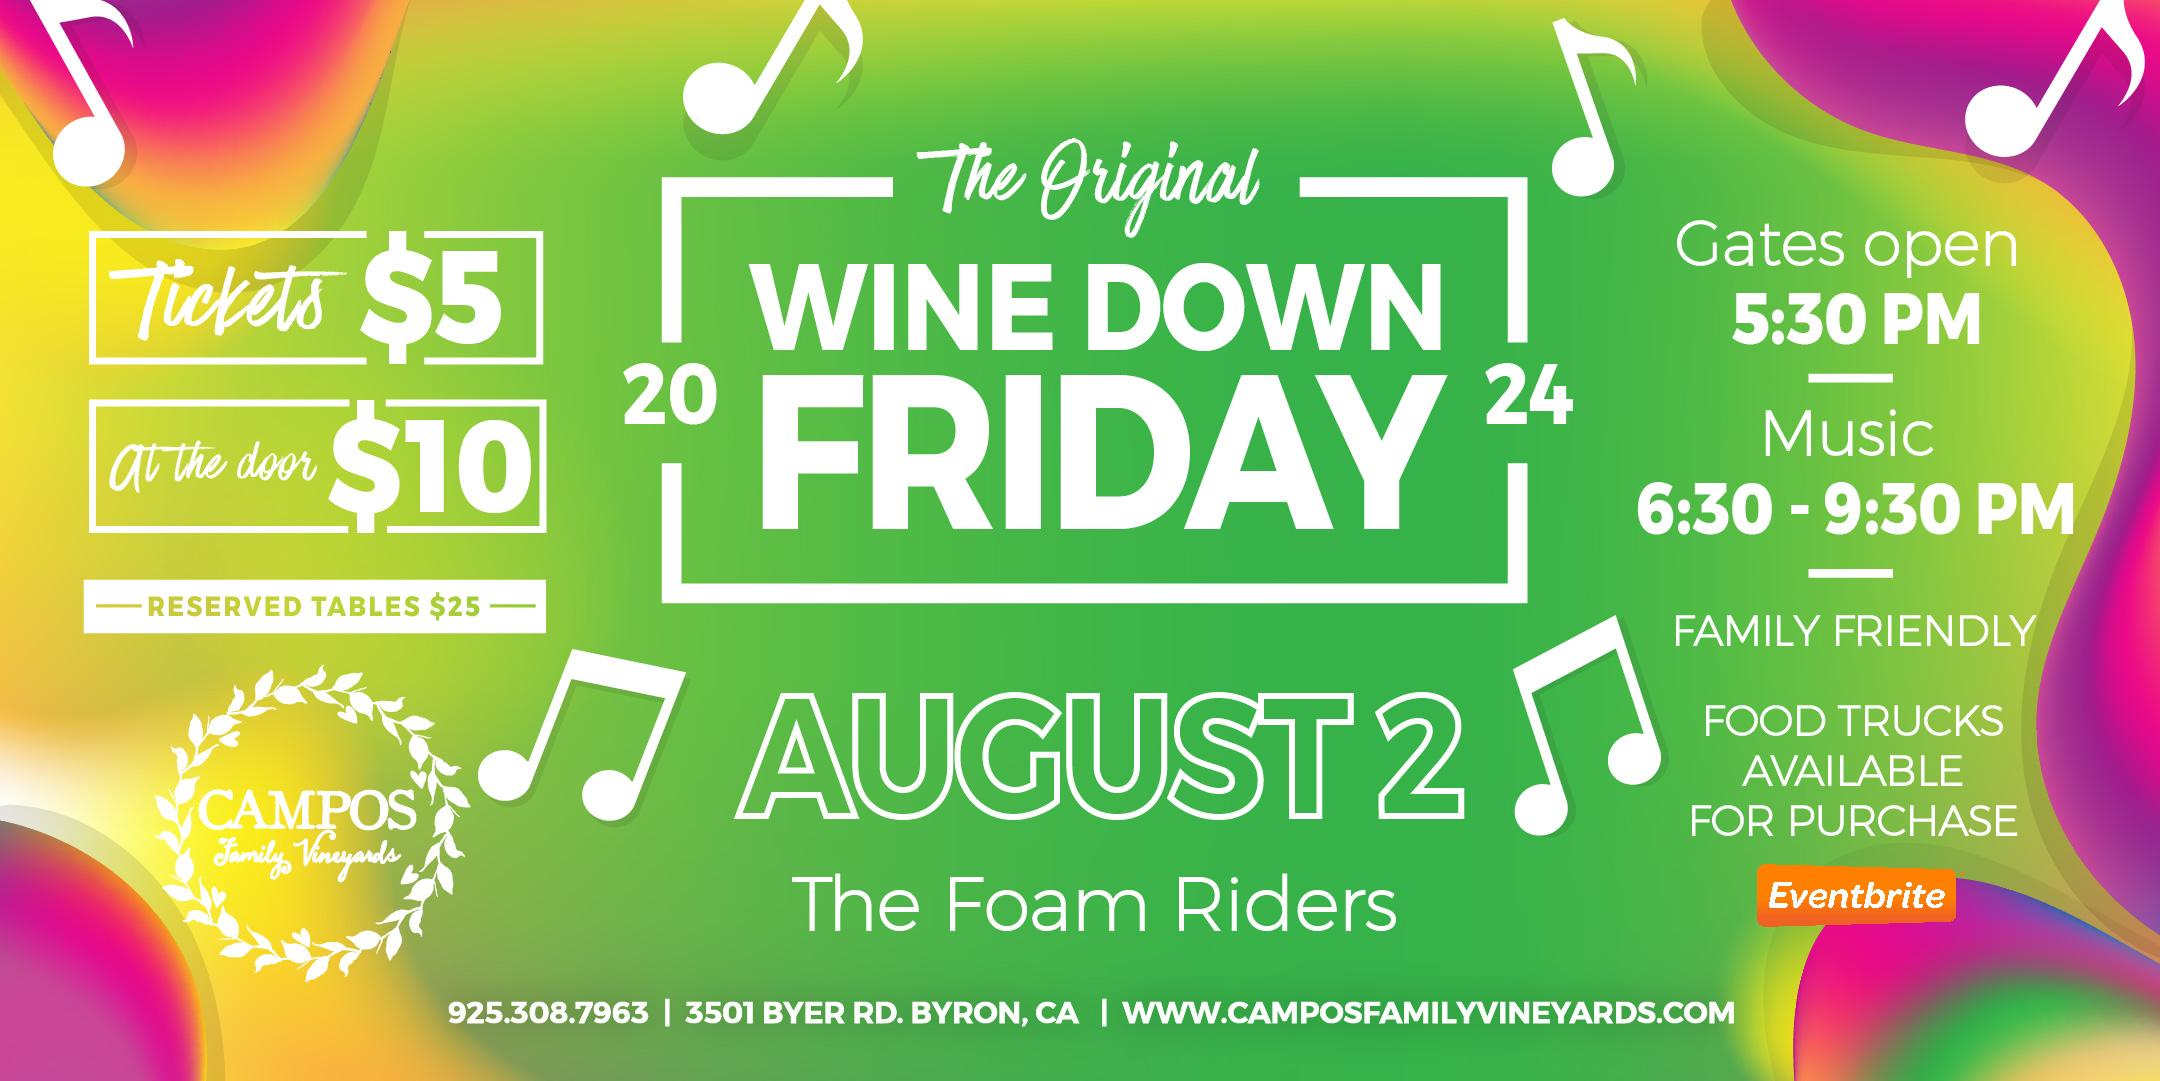 The Original Wine Down Friday - The Foam Riders